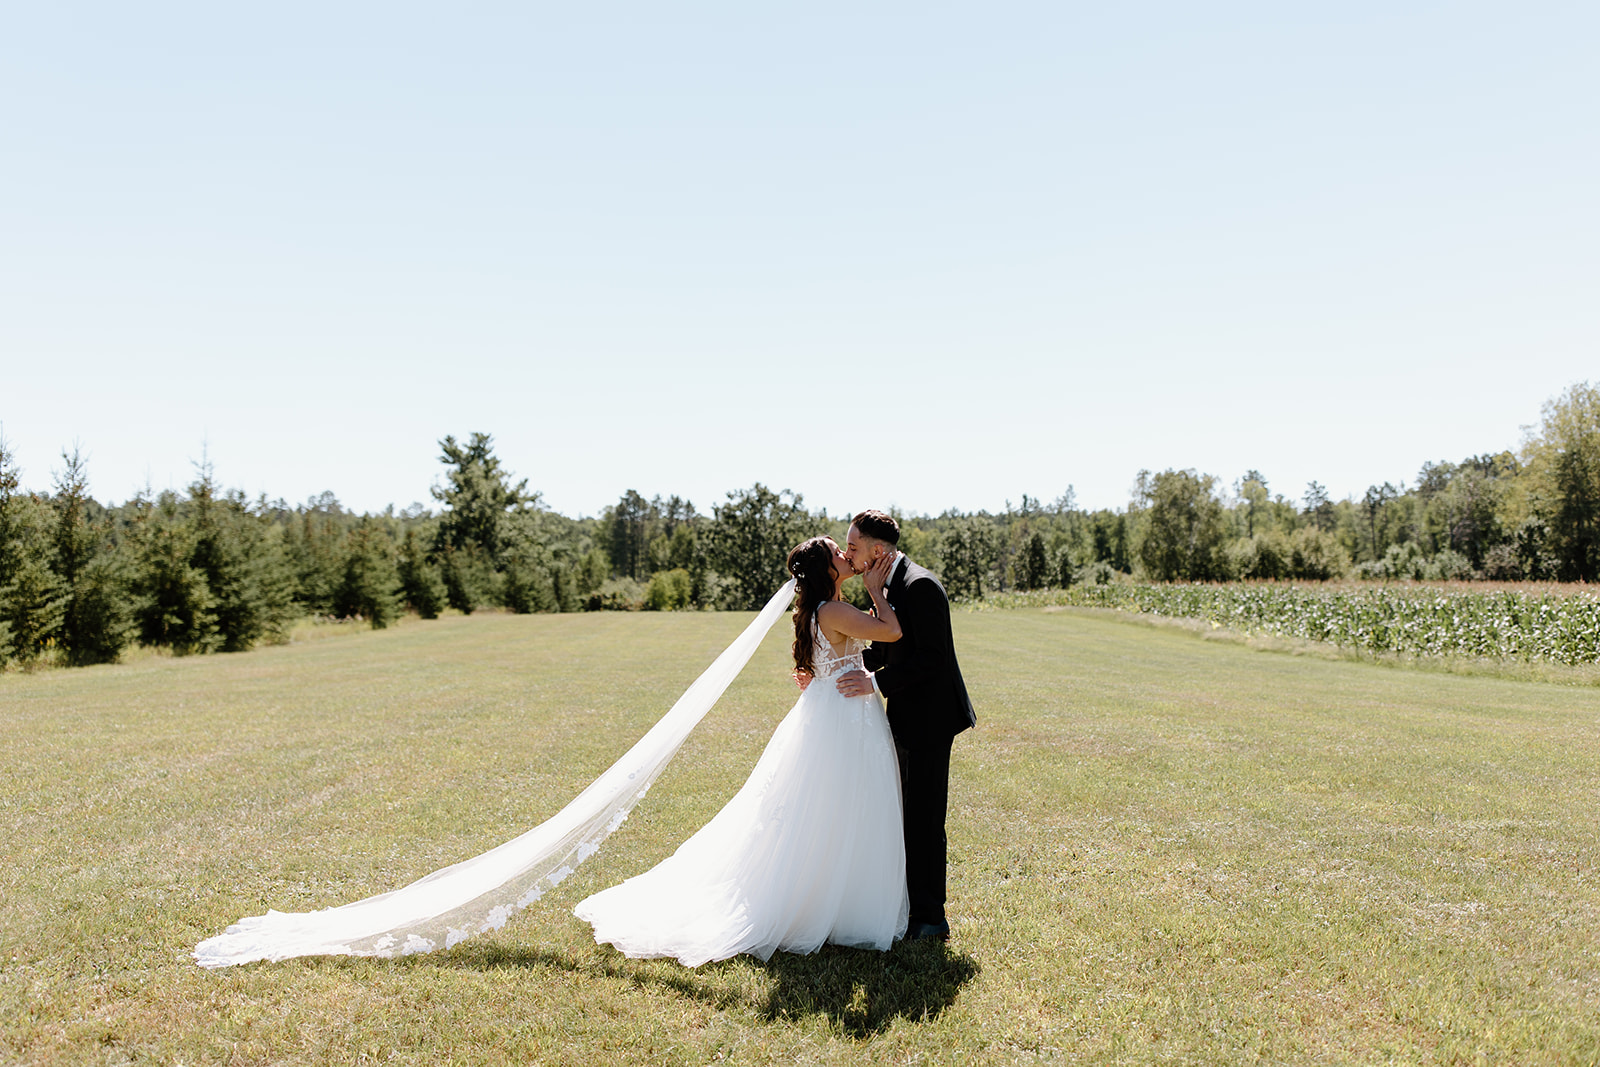 Bride and groom hug in an open field